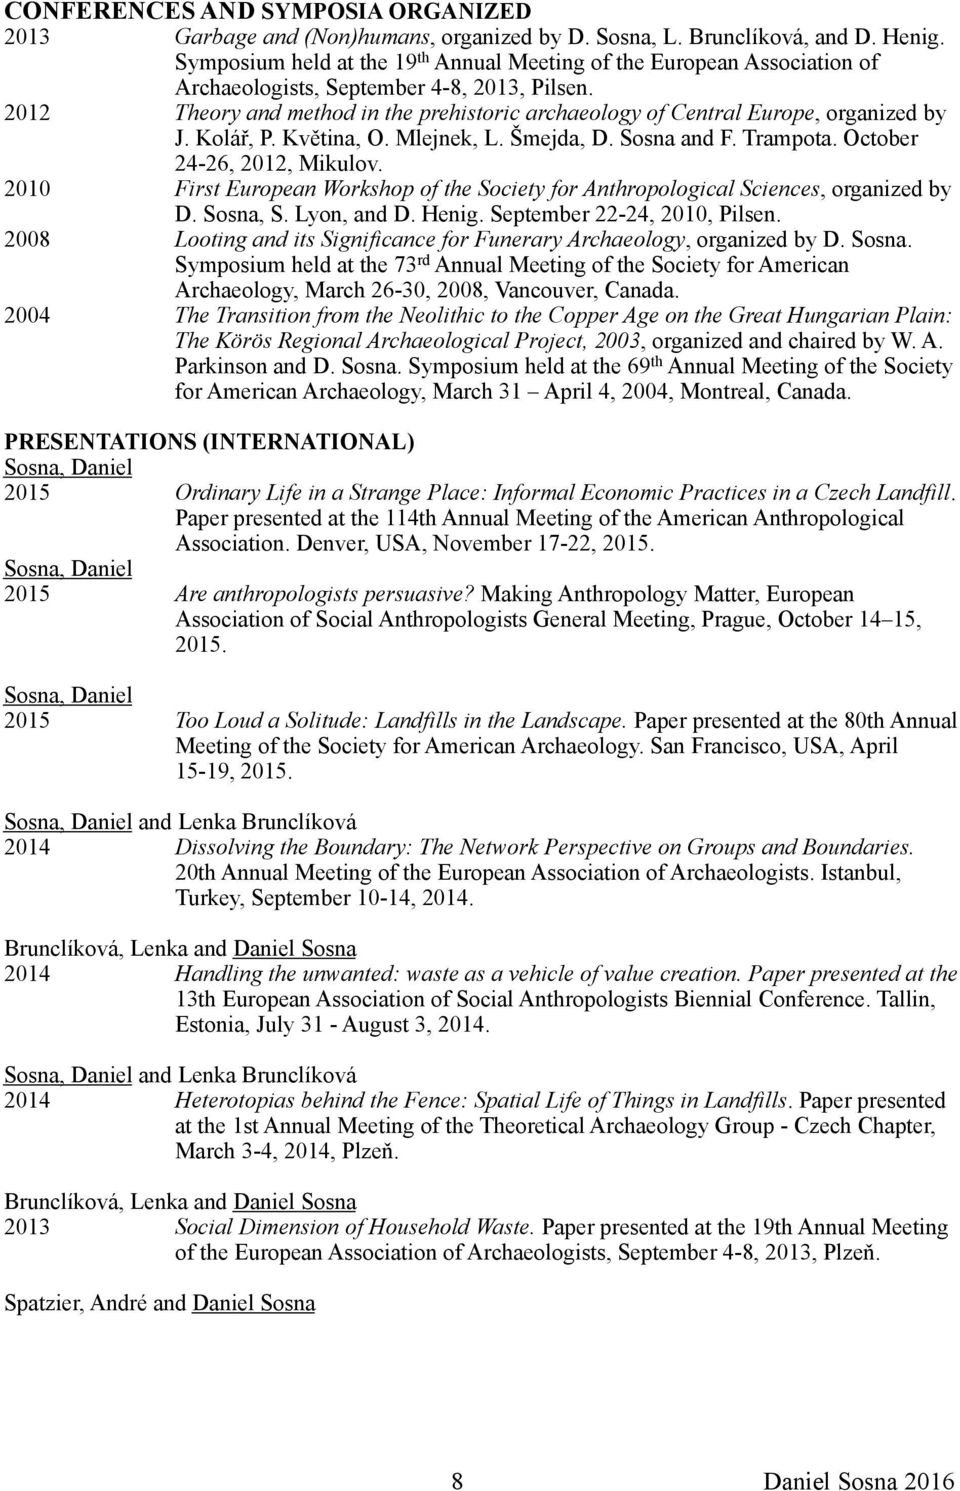 2012 Theory and method in the prehistoric archaeology of Central Europe, organized by J. Kolář, P. Květina, O. Mlejnek, L. Šmejda, D. Sosna and F. Trampota. October 24-26, 2012, Mikulov.